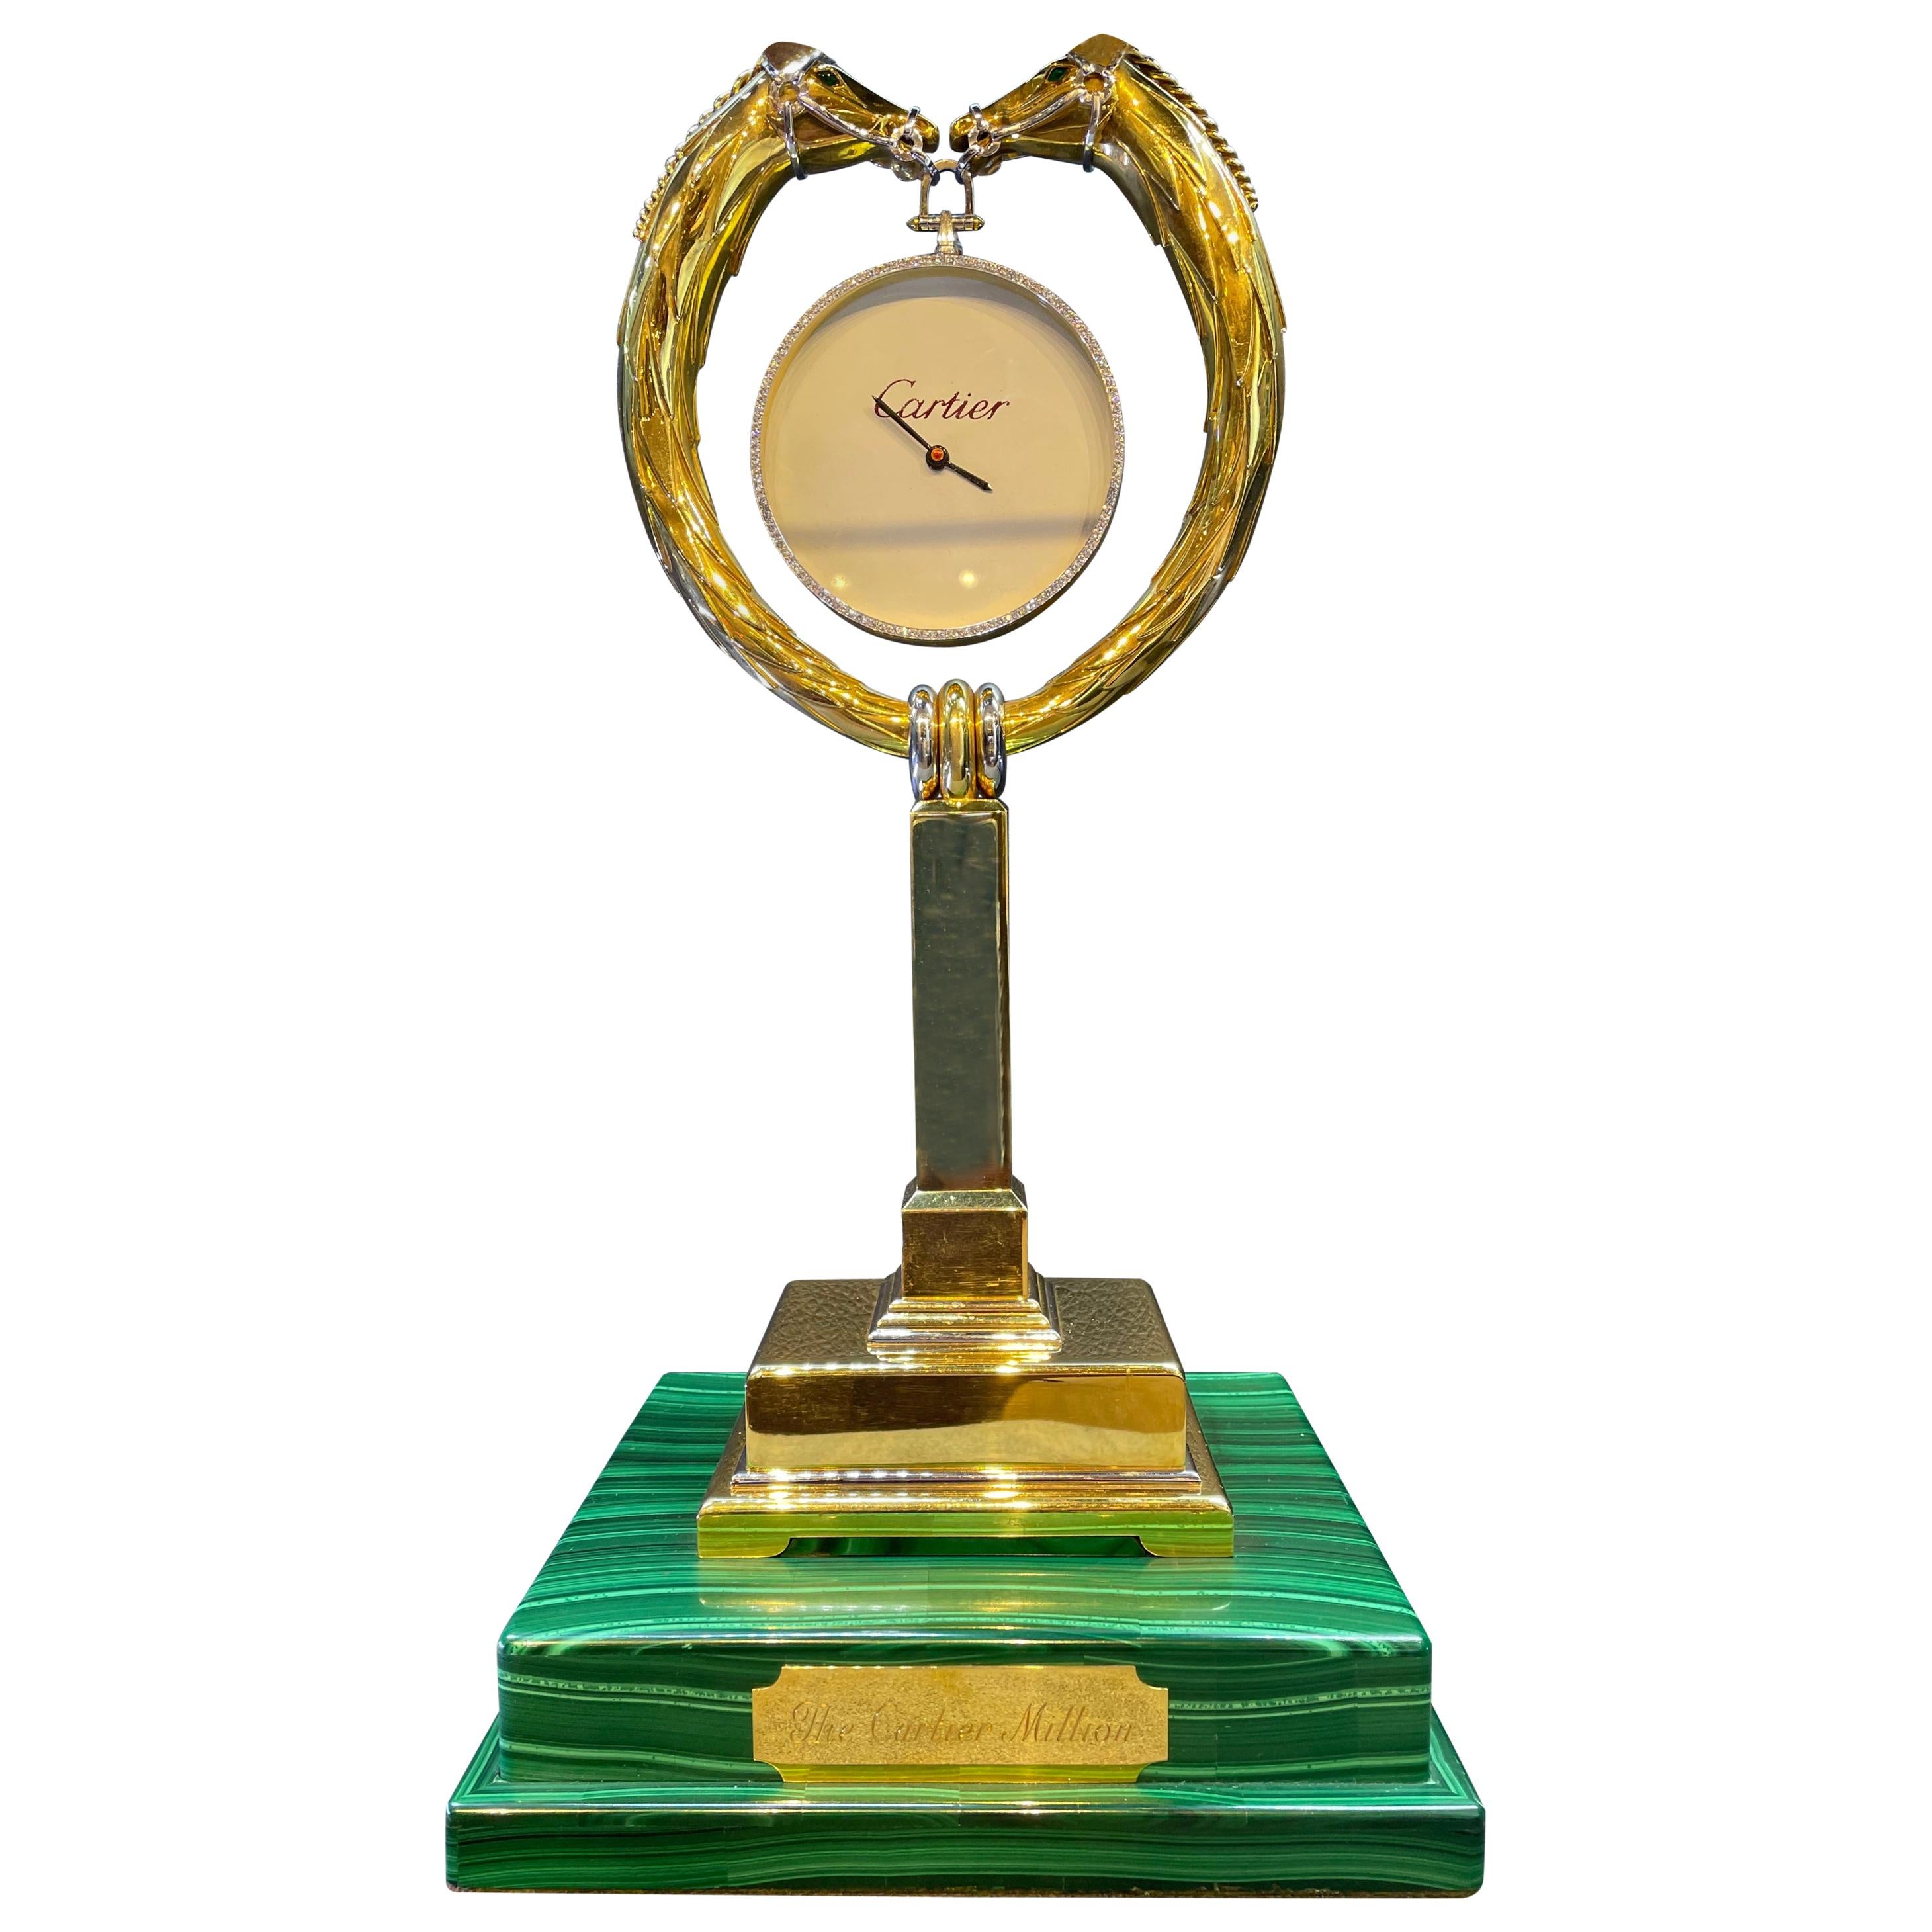 Monumental Cartier Gold Horse Trophy Clock, "The Cartier Million"